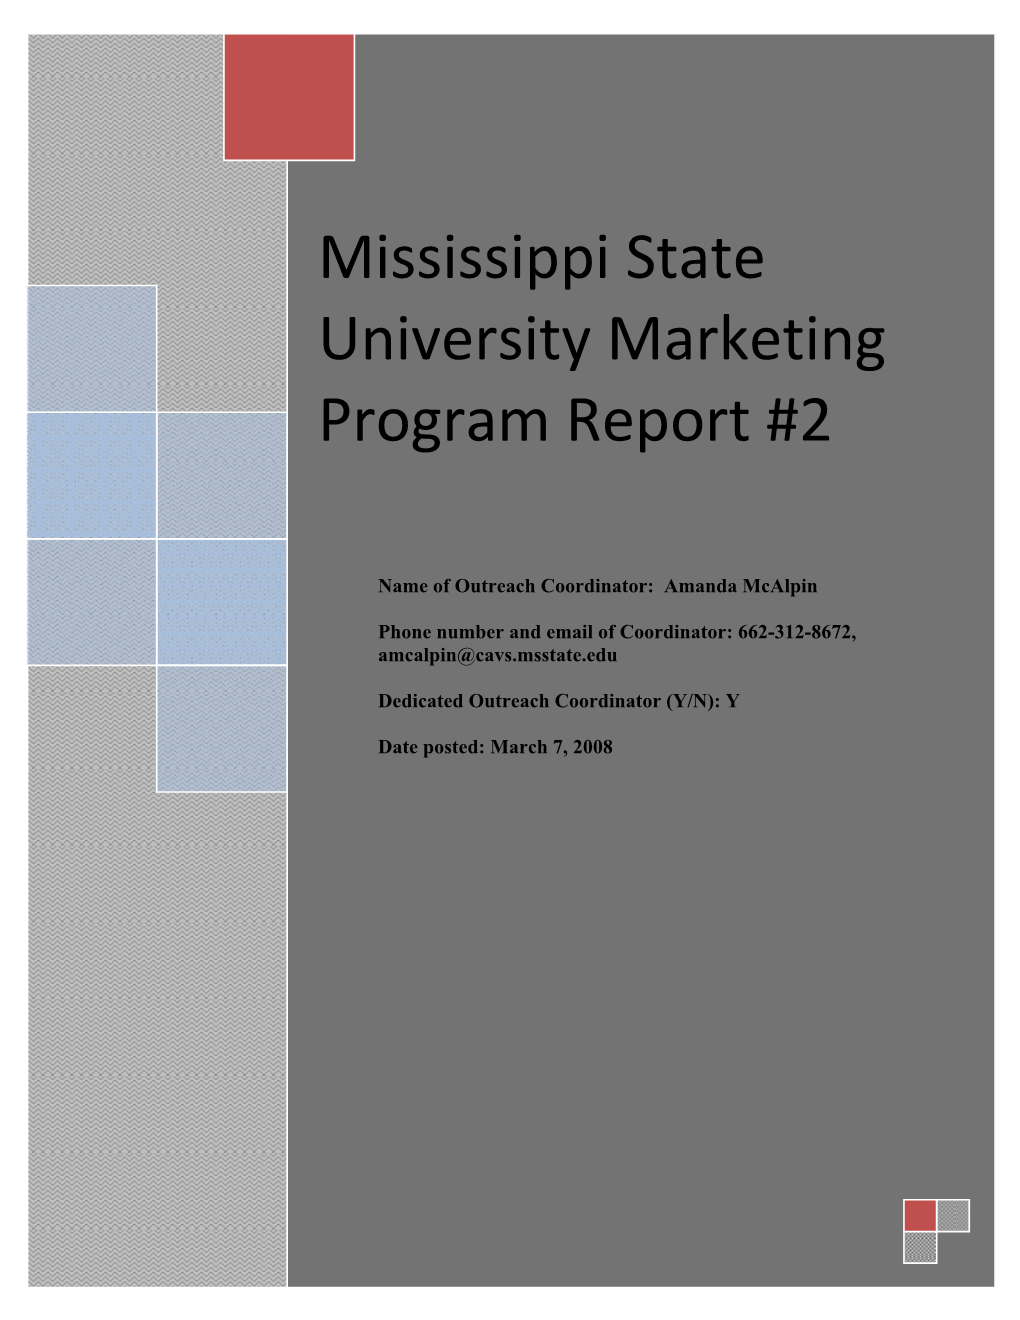 Mississippi State University Marketing Program Report #2